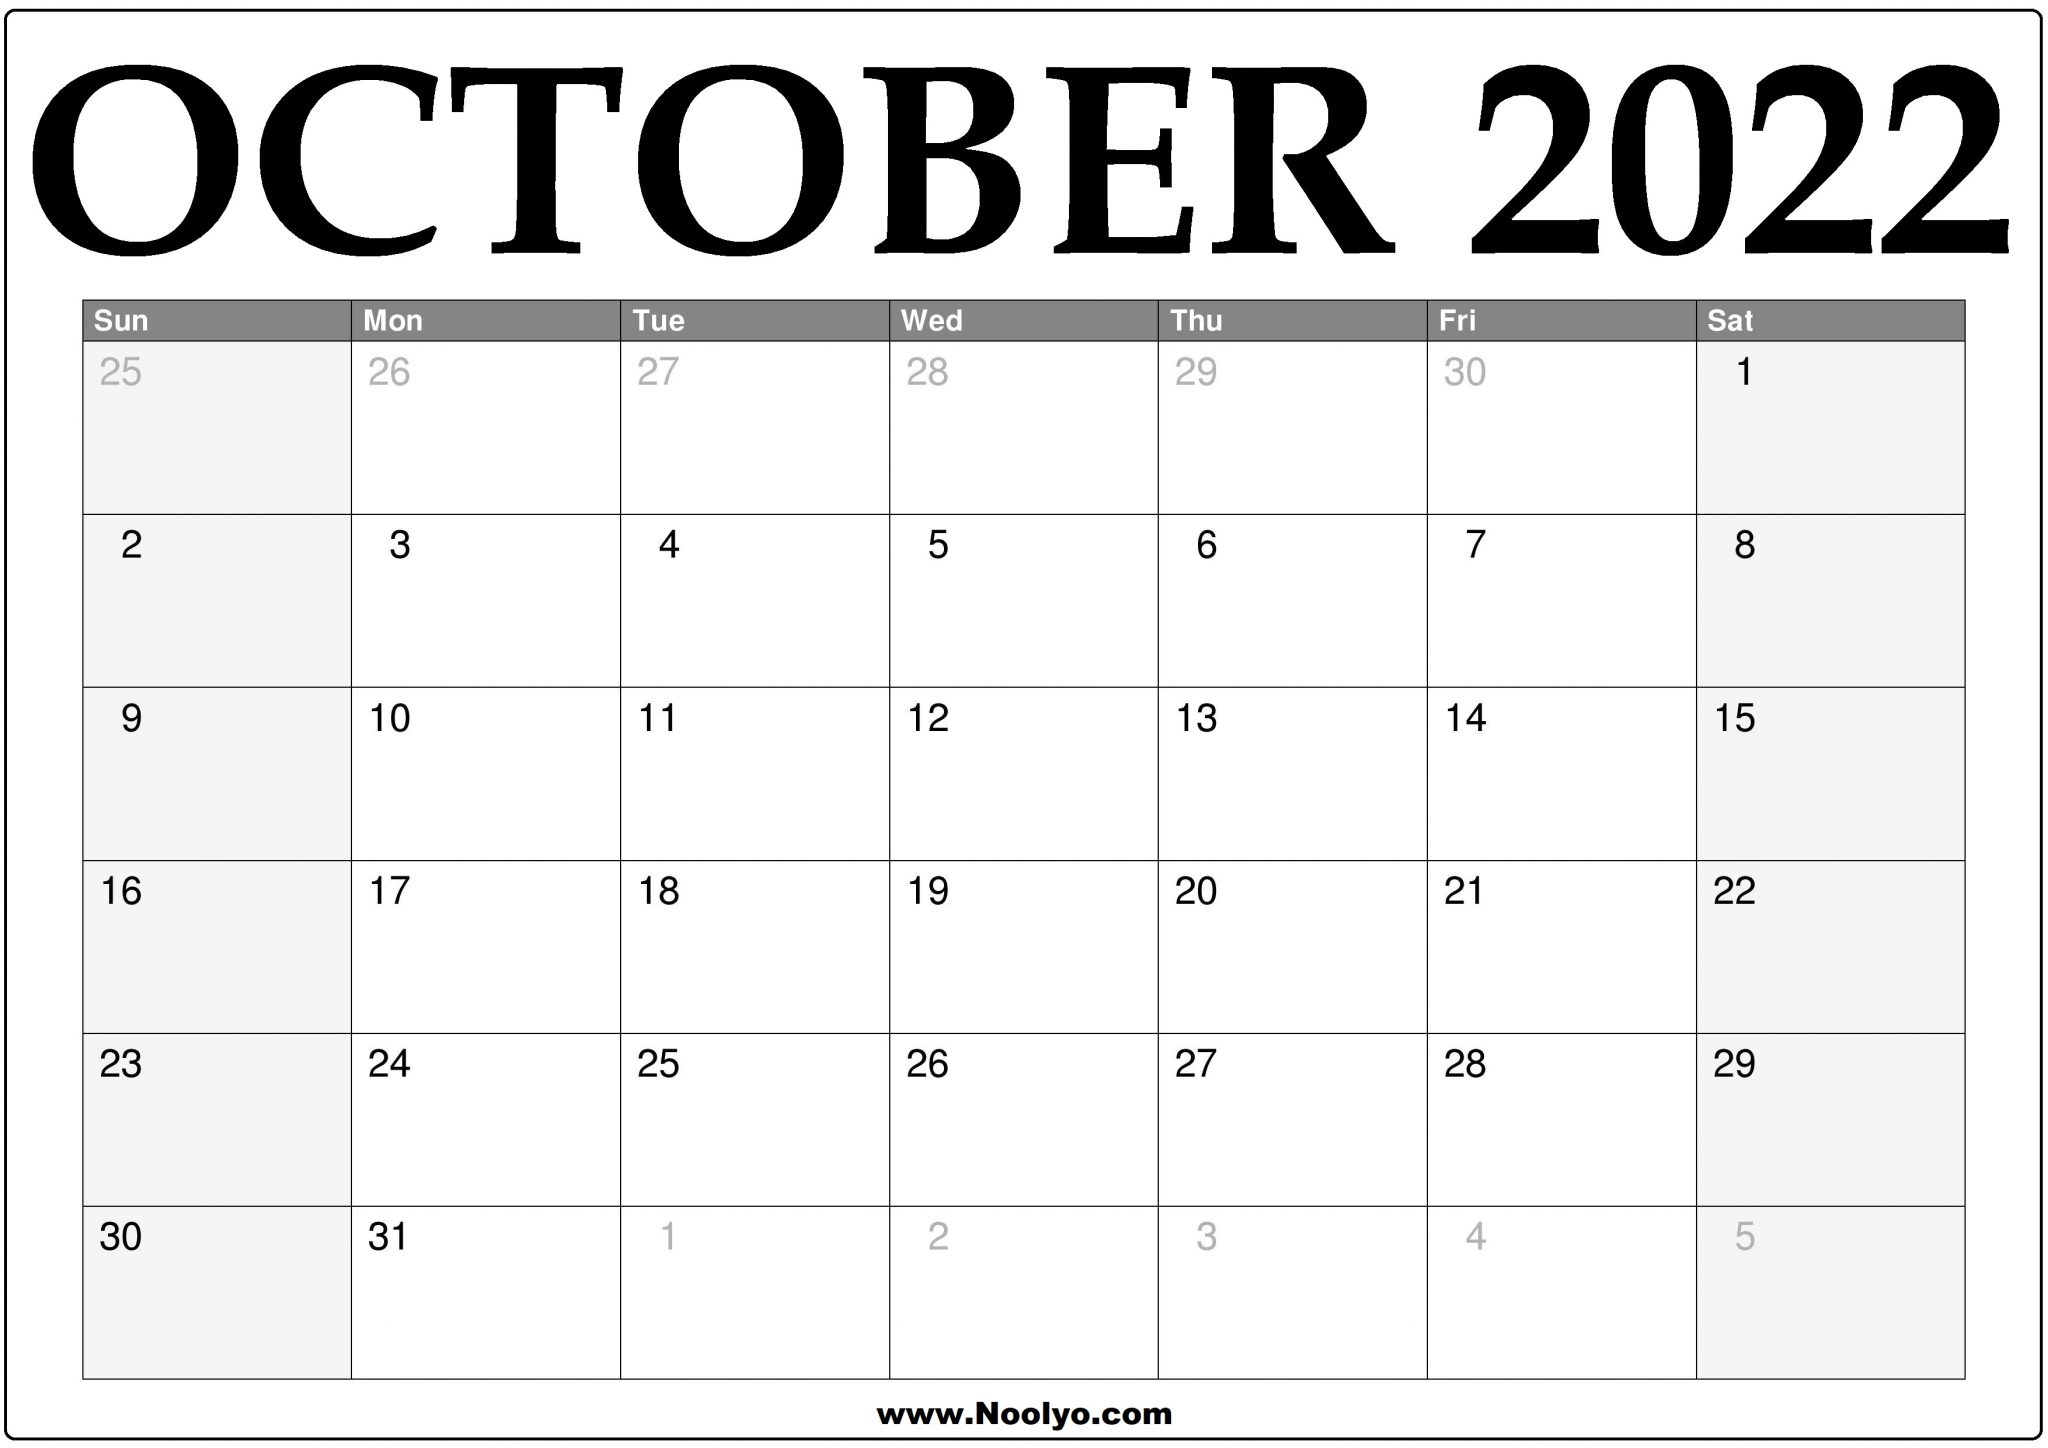 2022 October Calendar Printable – Download Free - Noolyo.com Calendars